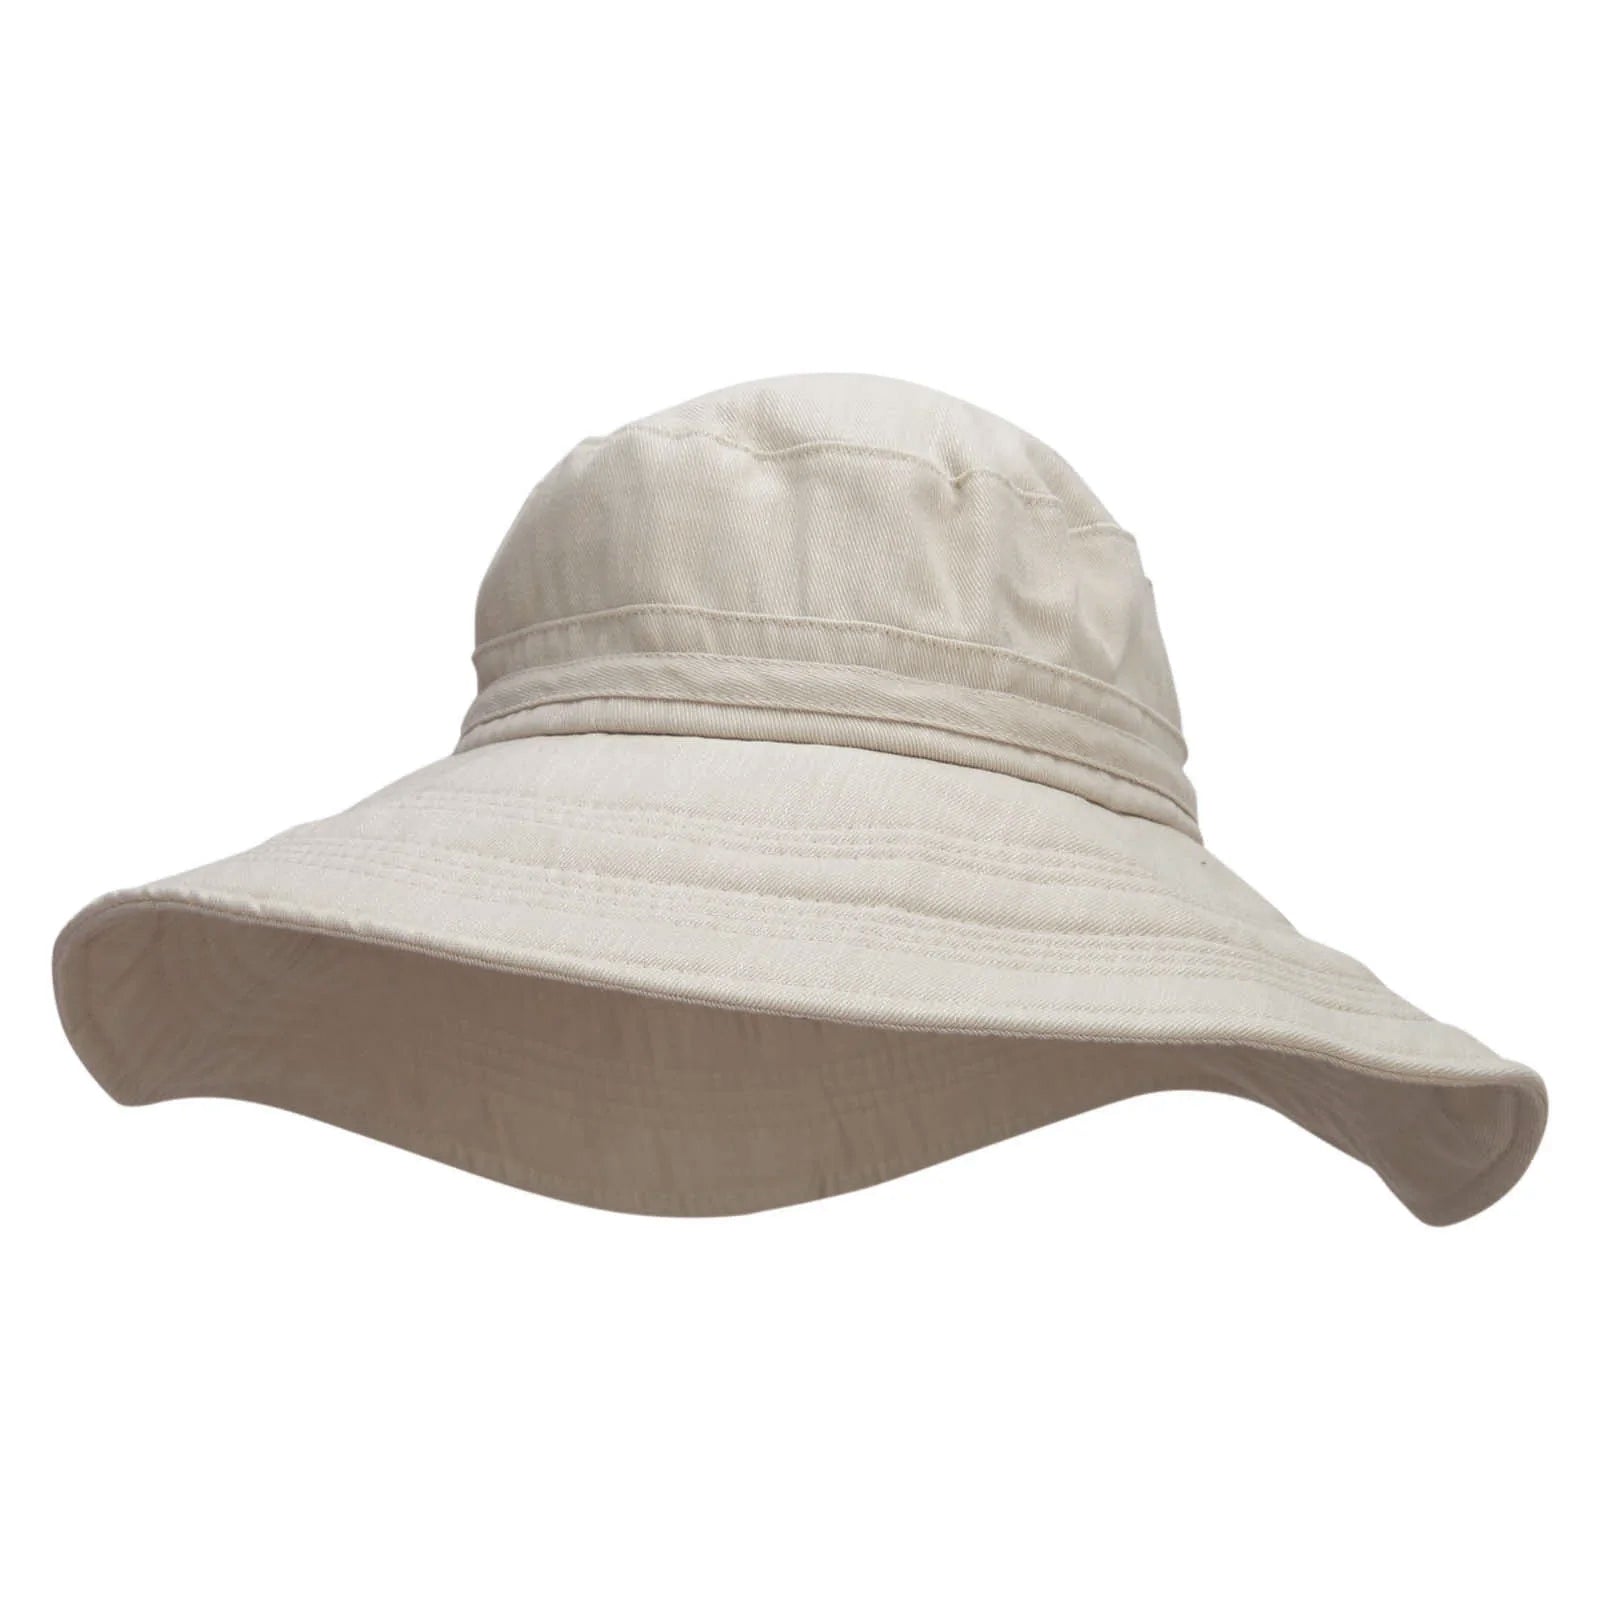 Plus Size Caps, Hats, Beanies & More | Big Hats / Caps | e4Hats